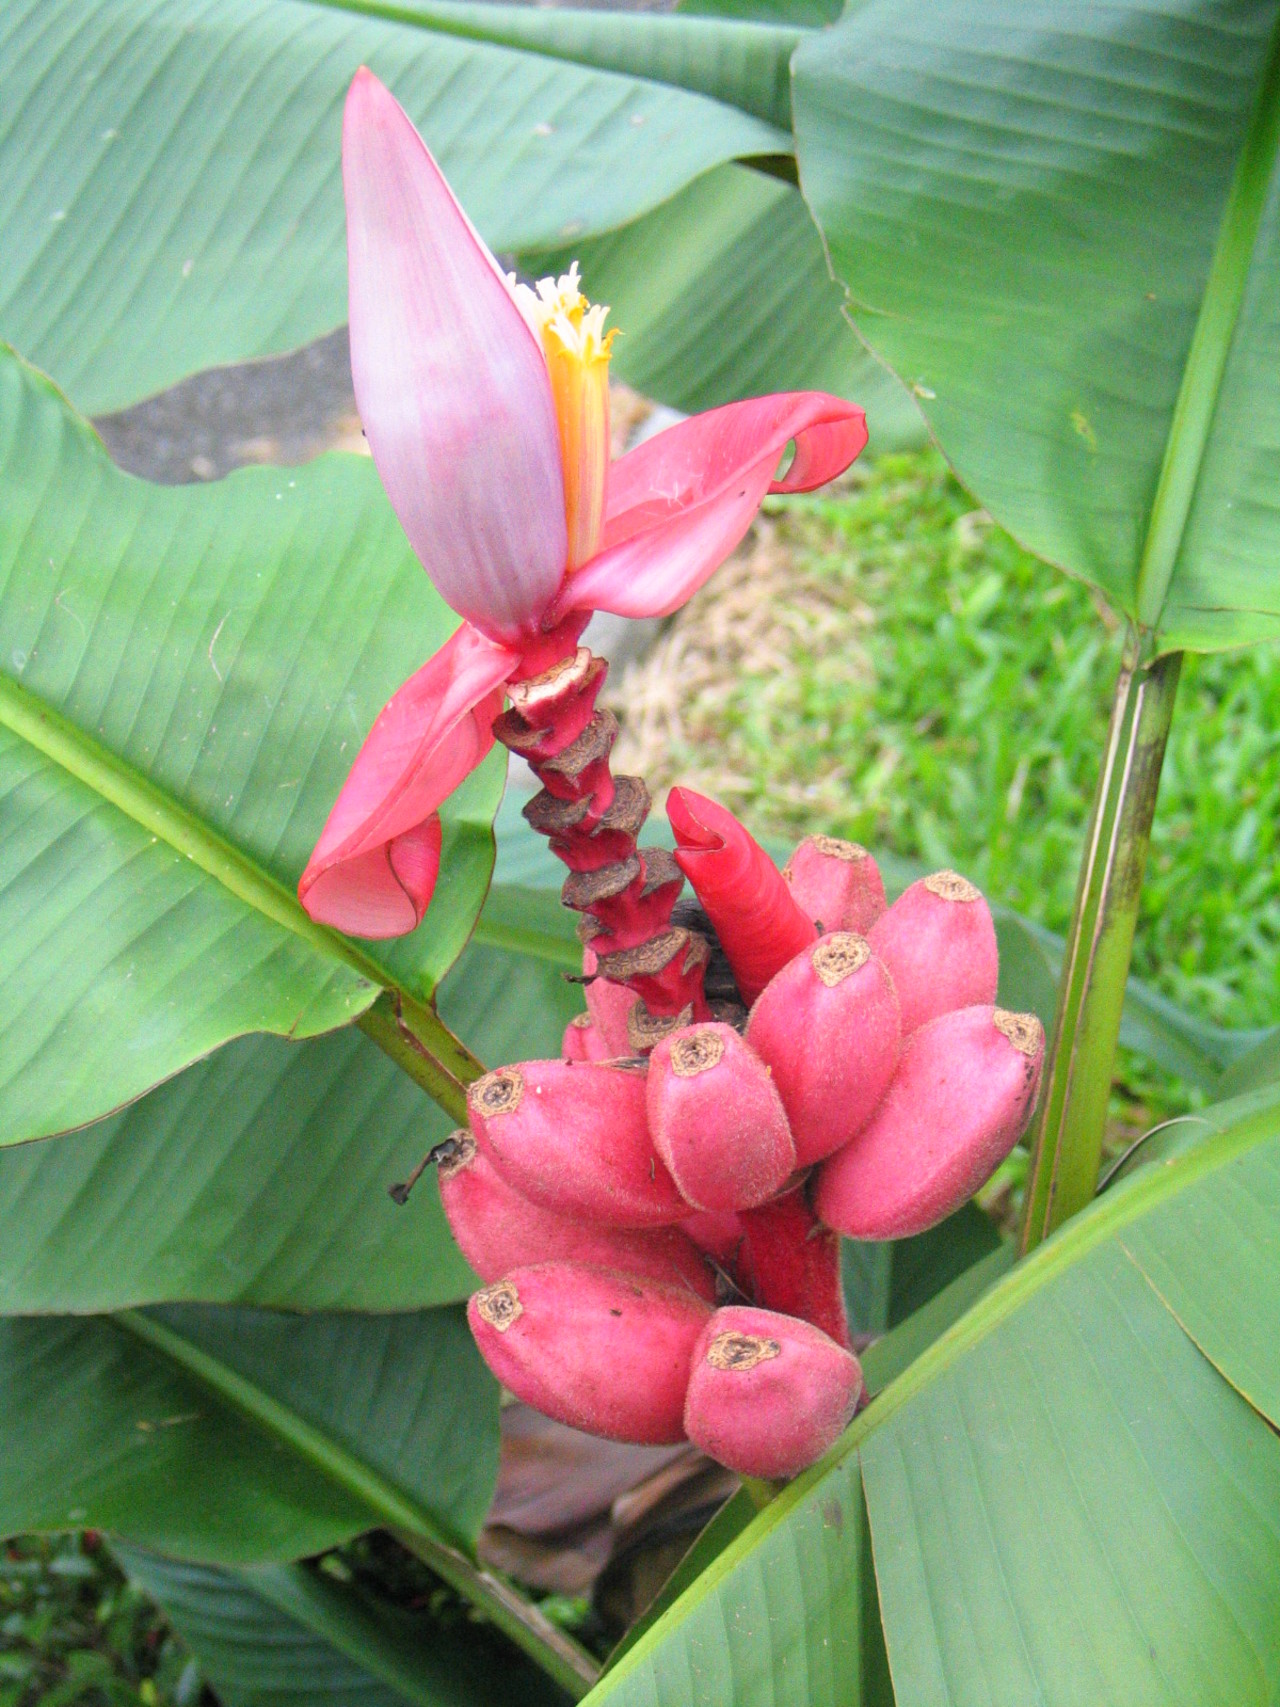 Dwarf banana red Musa acuminata